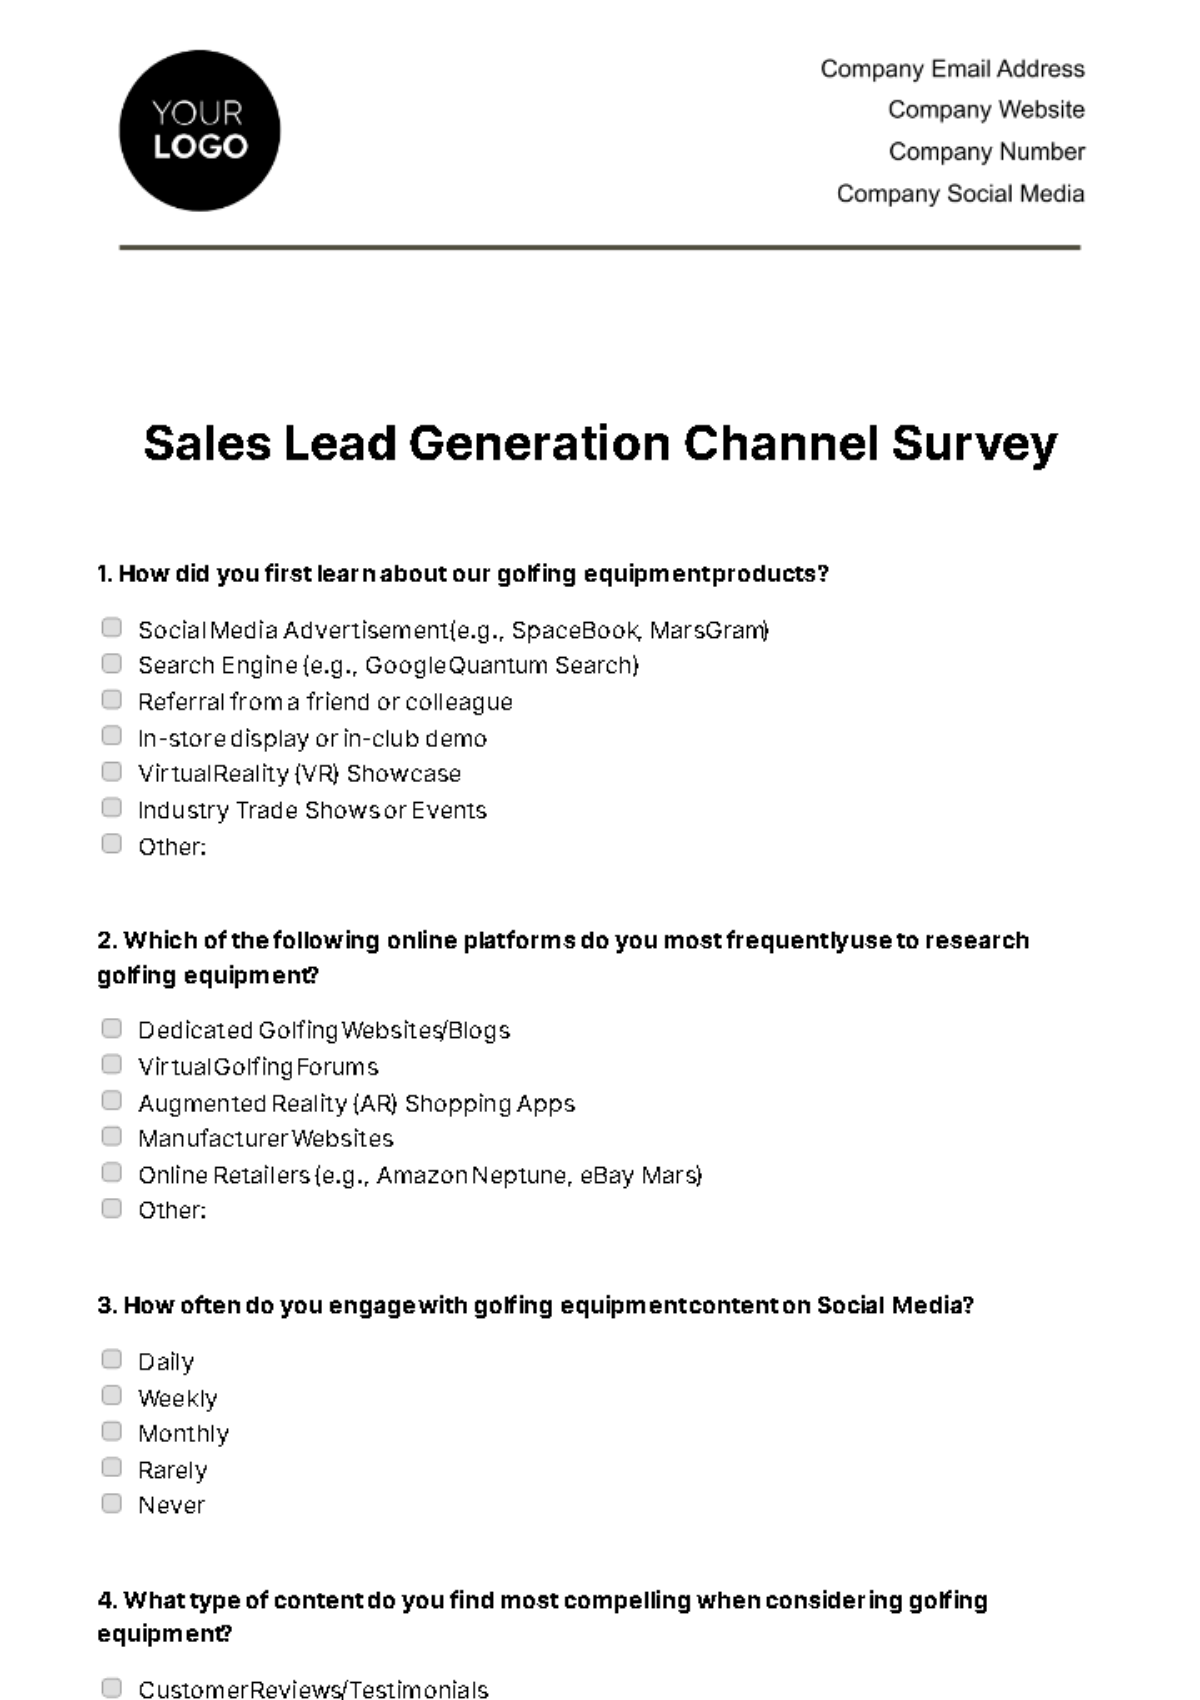 Sales Lead Generation Channel Survey Template